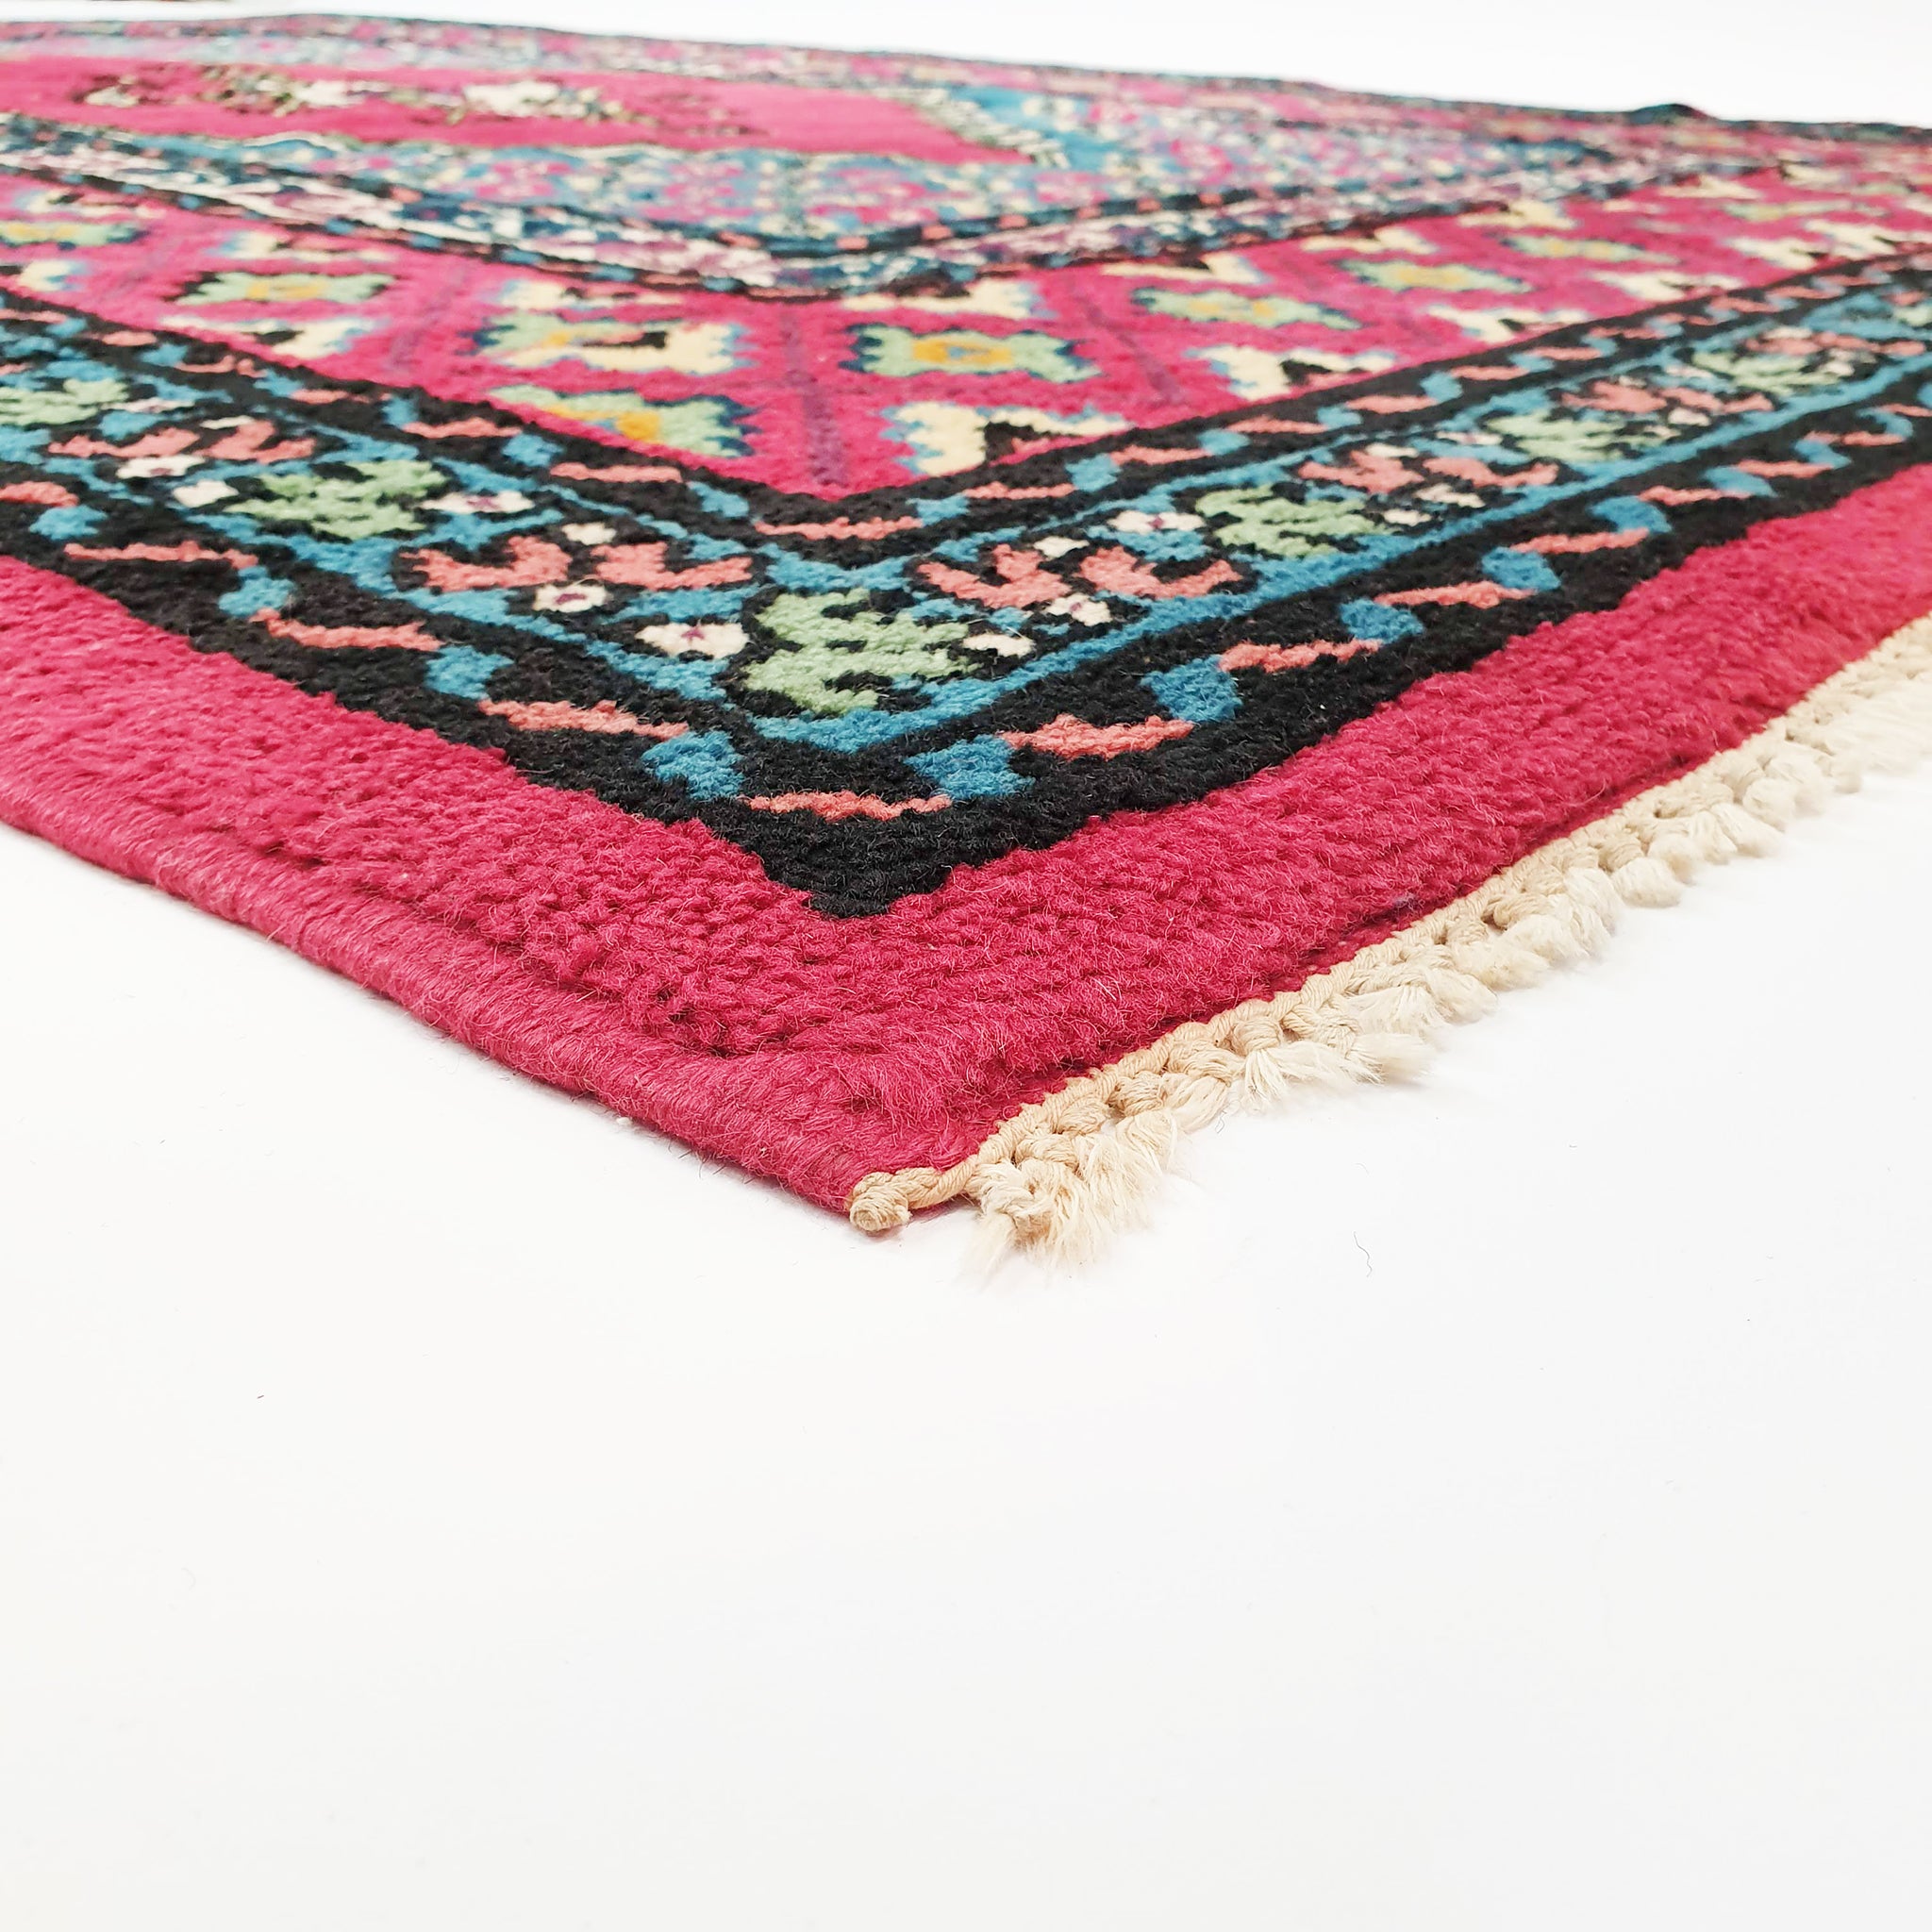 Vintage hand-woven rug